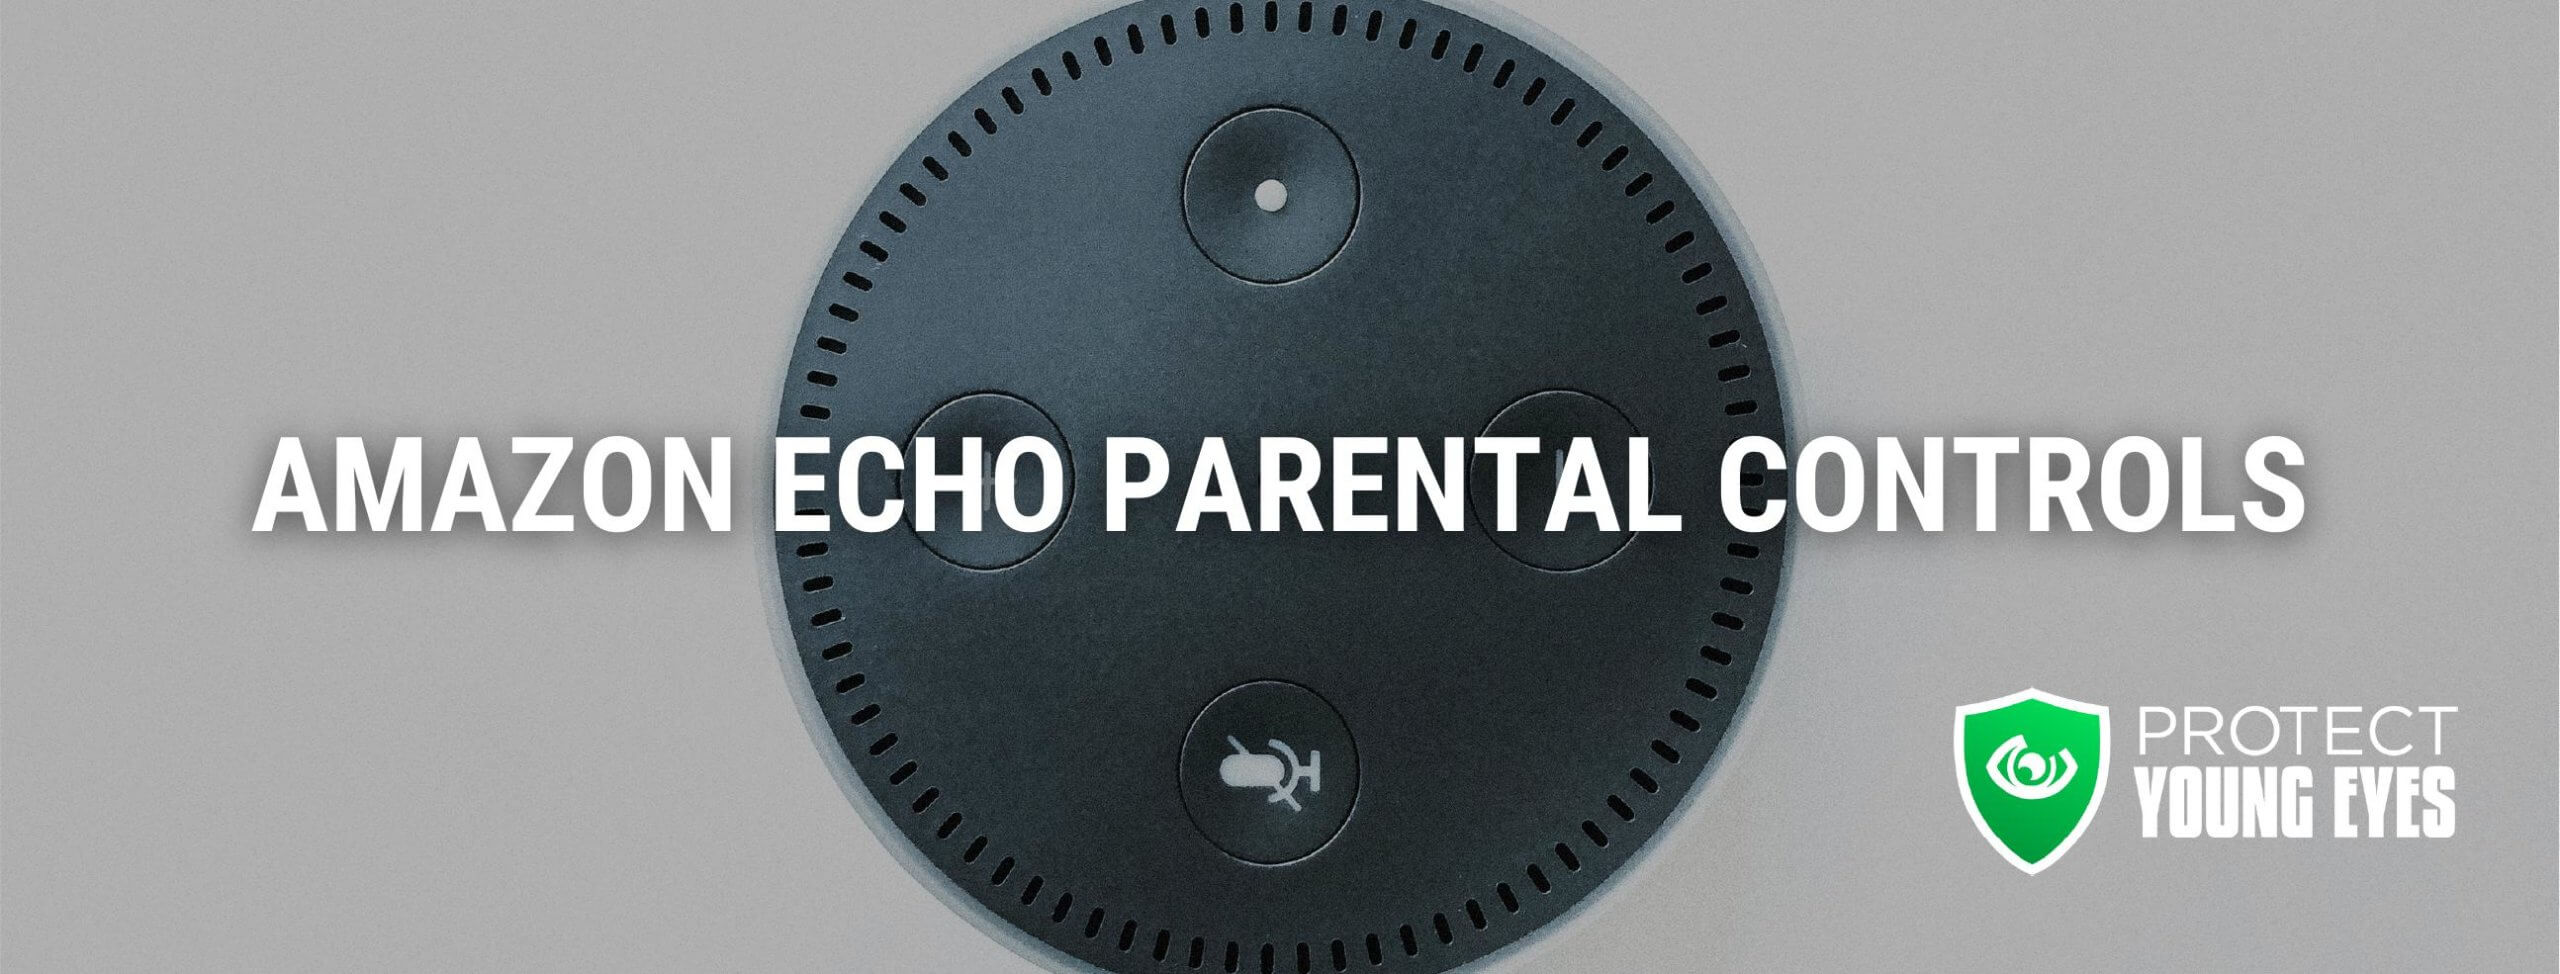 Amazon Echo Parental Controls